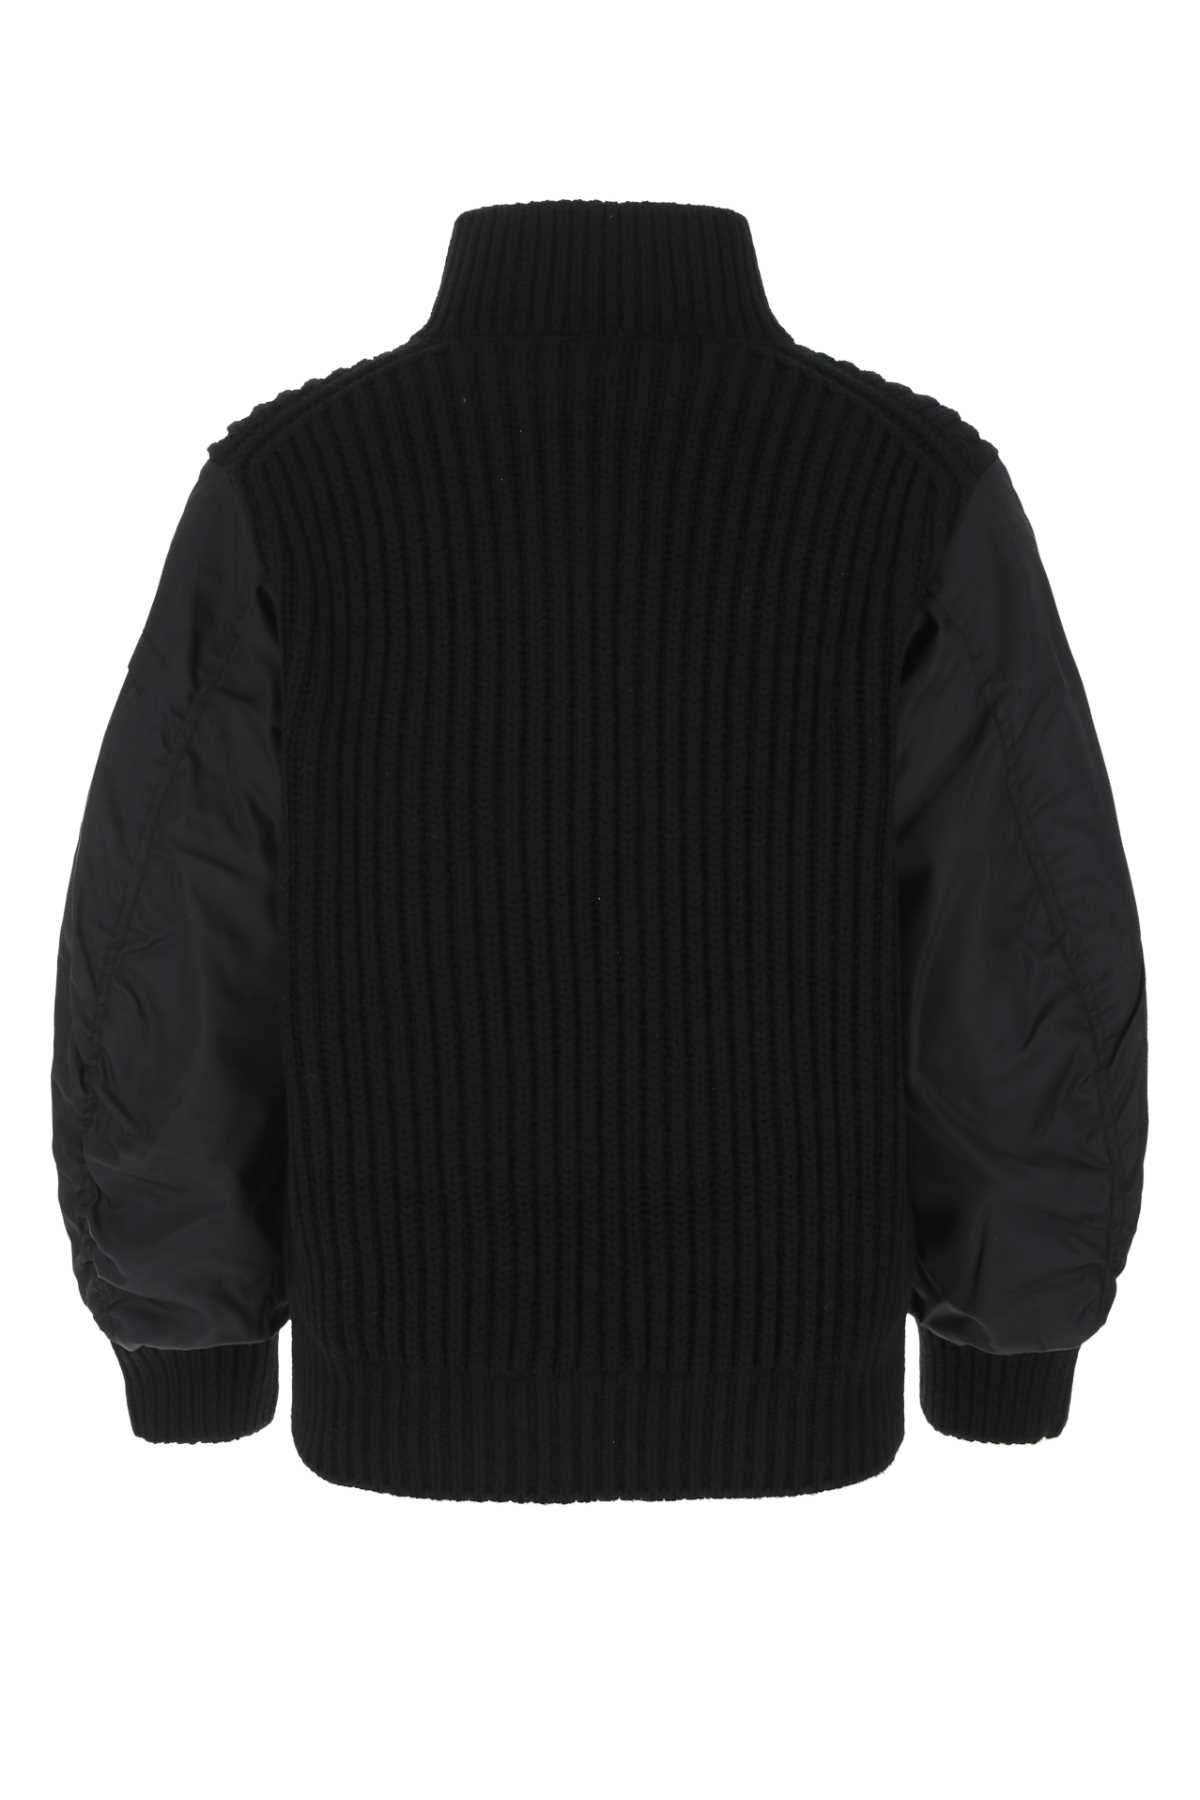 Prada Black Cashmere And Re-nylon Jacket In F0002